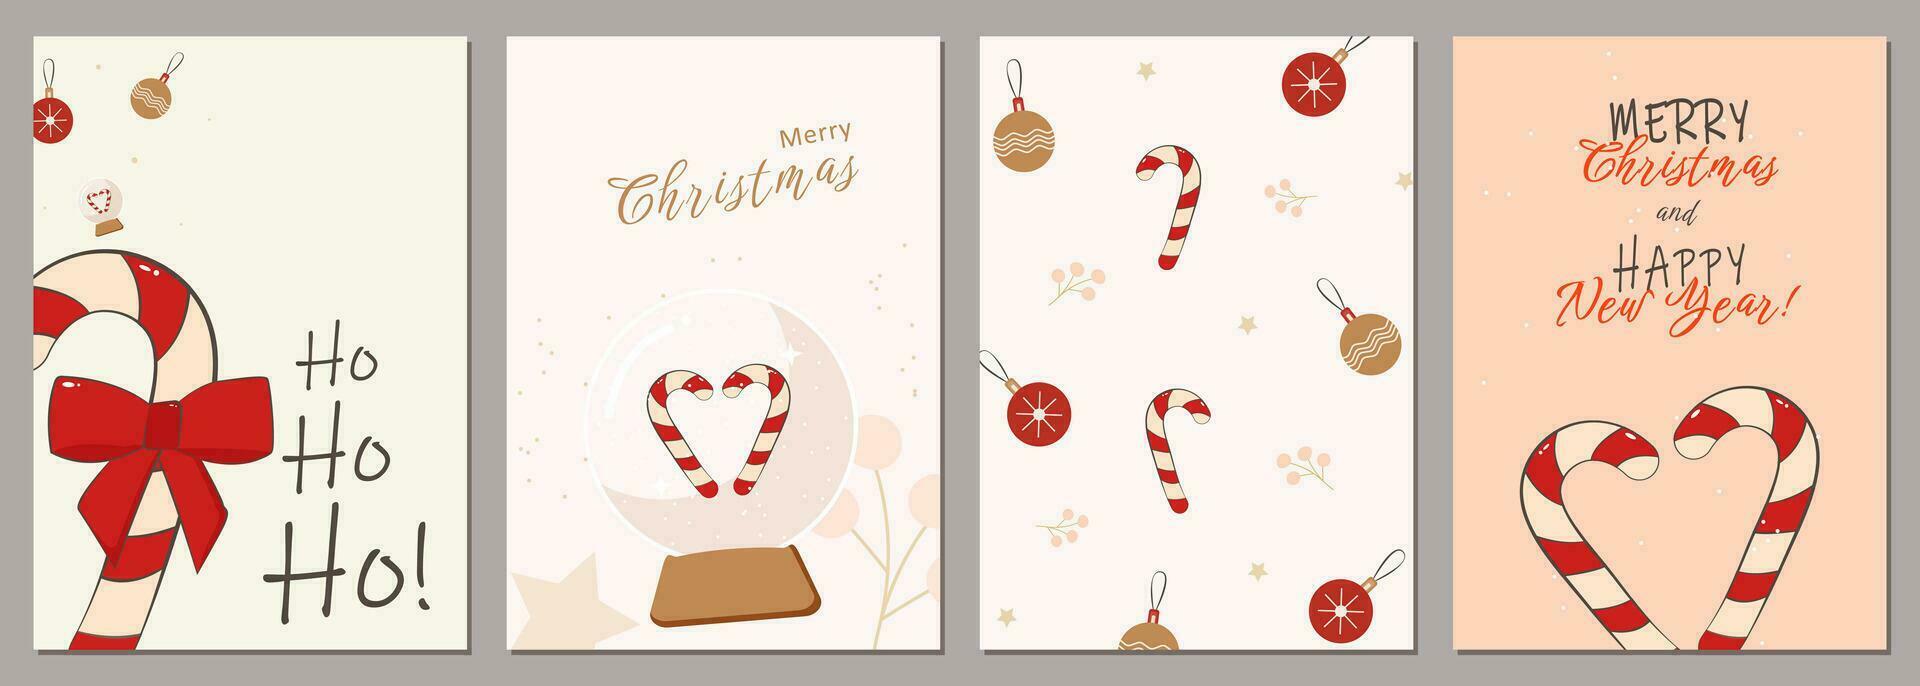 merry christmas card template set 9 vector